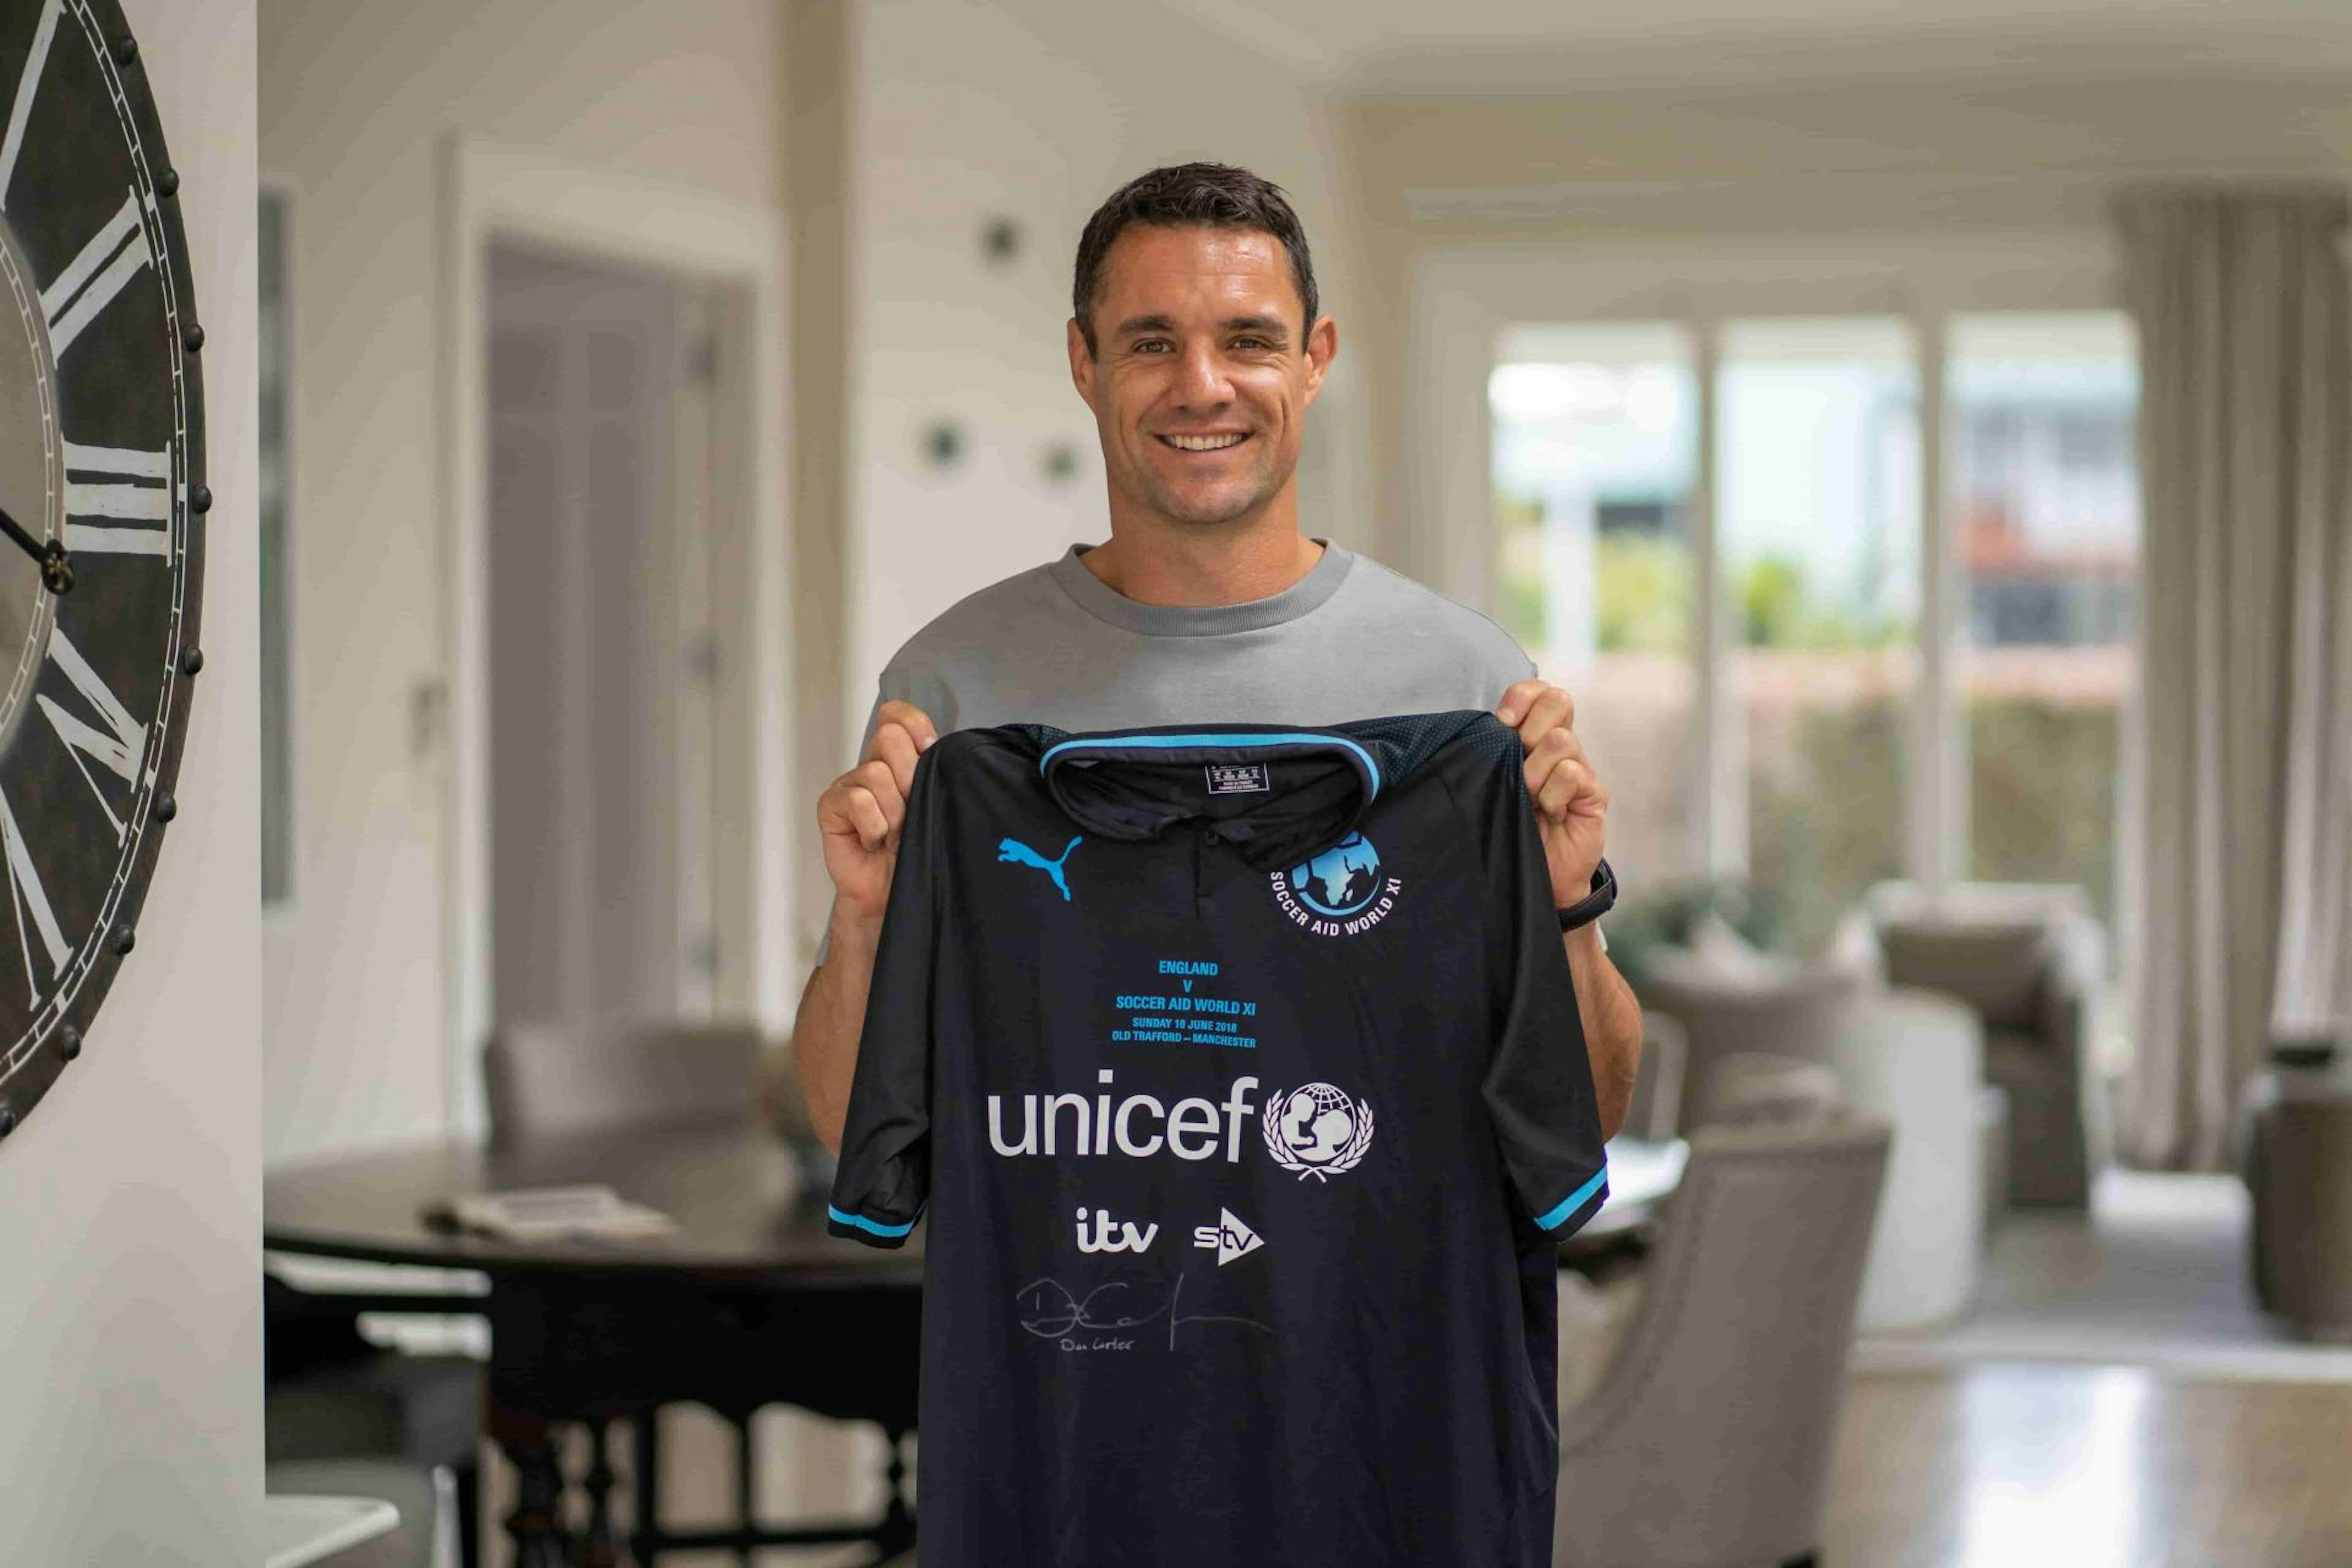 Dan Carter appointed as UNICEF Aotearoa New Zealand Ambassador 